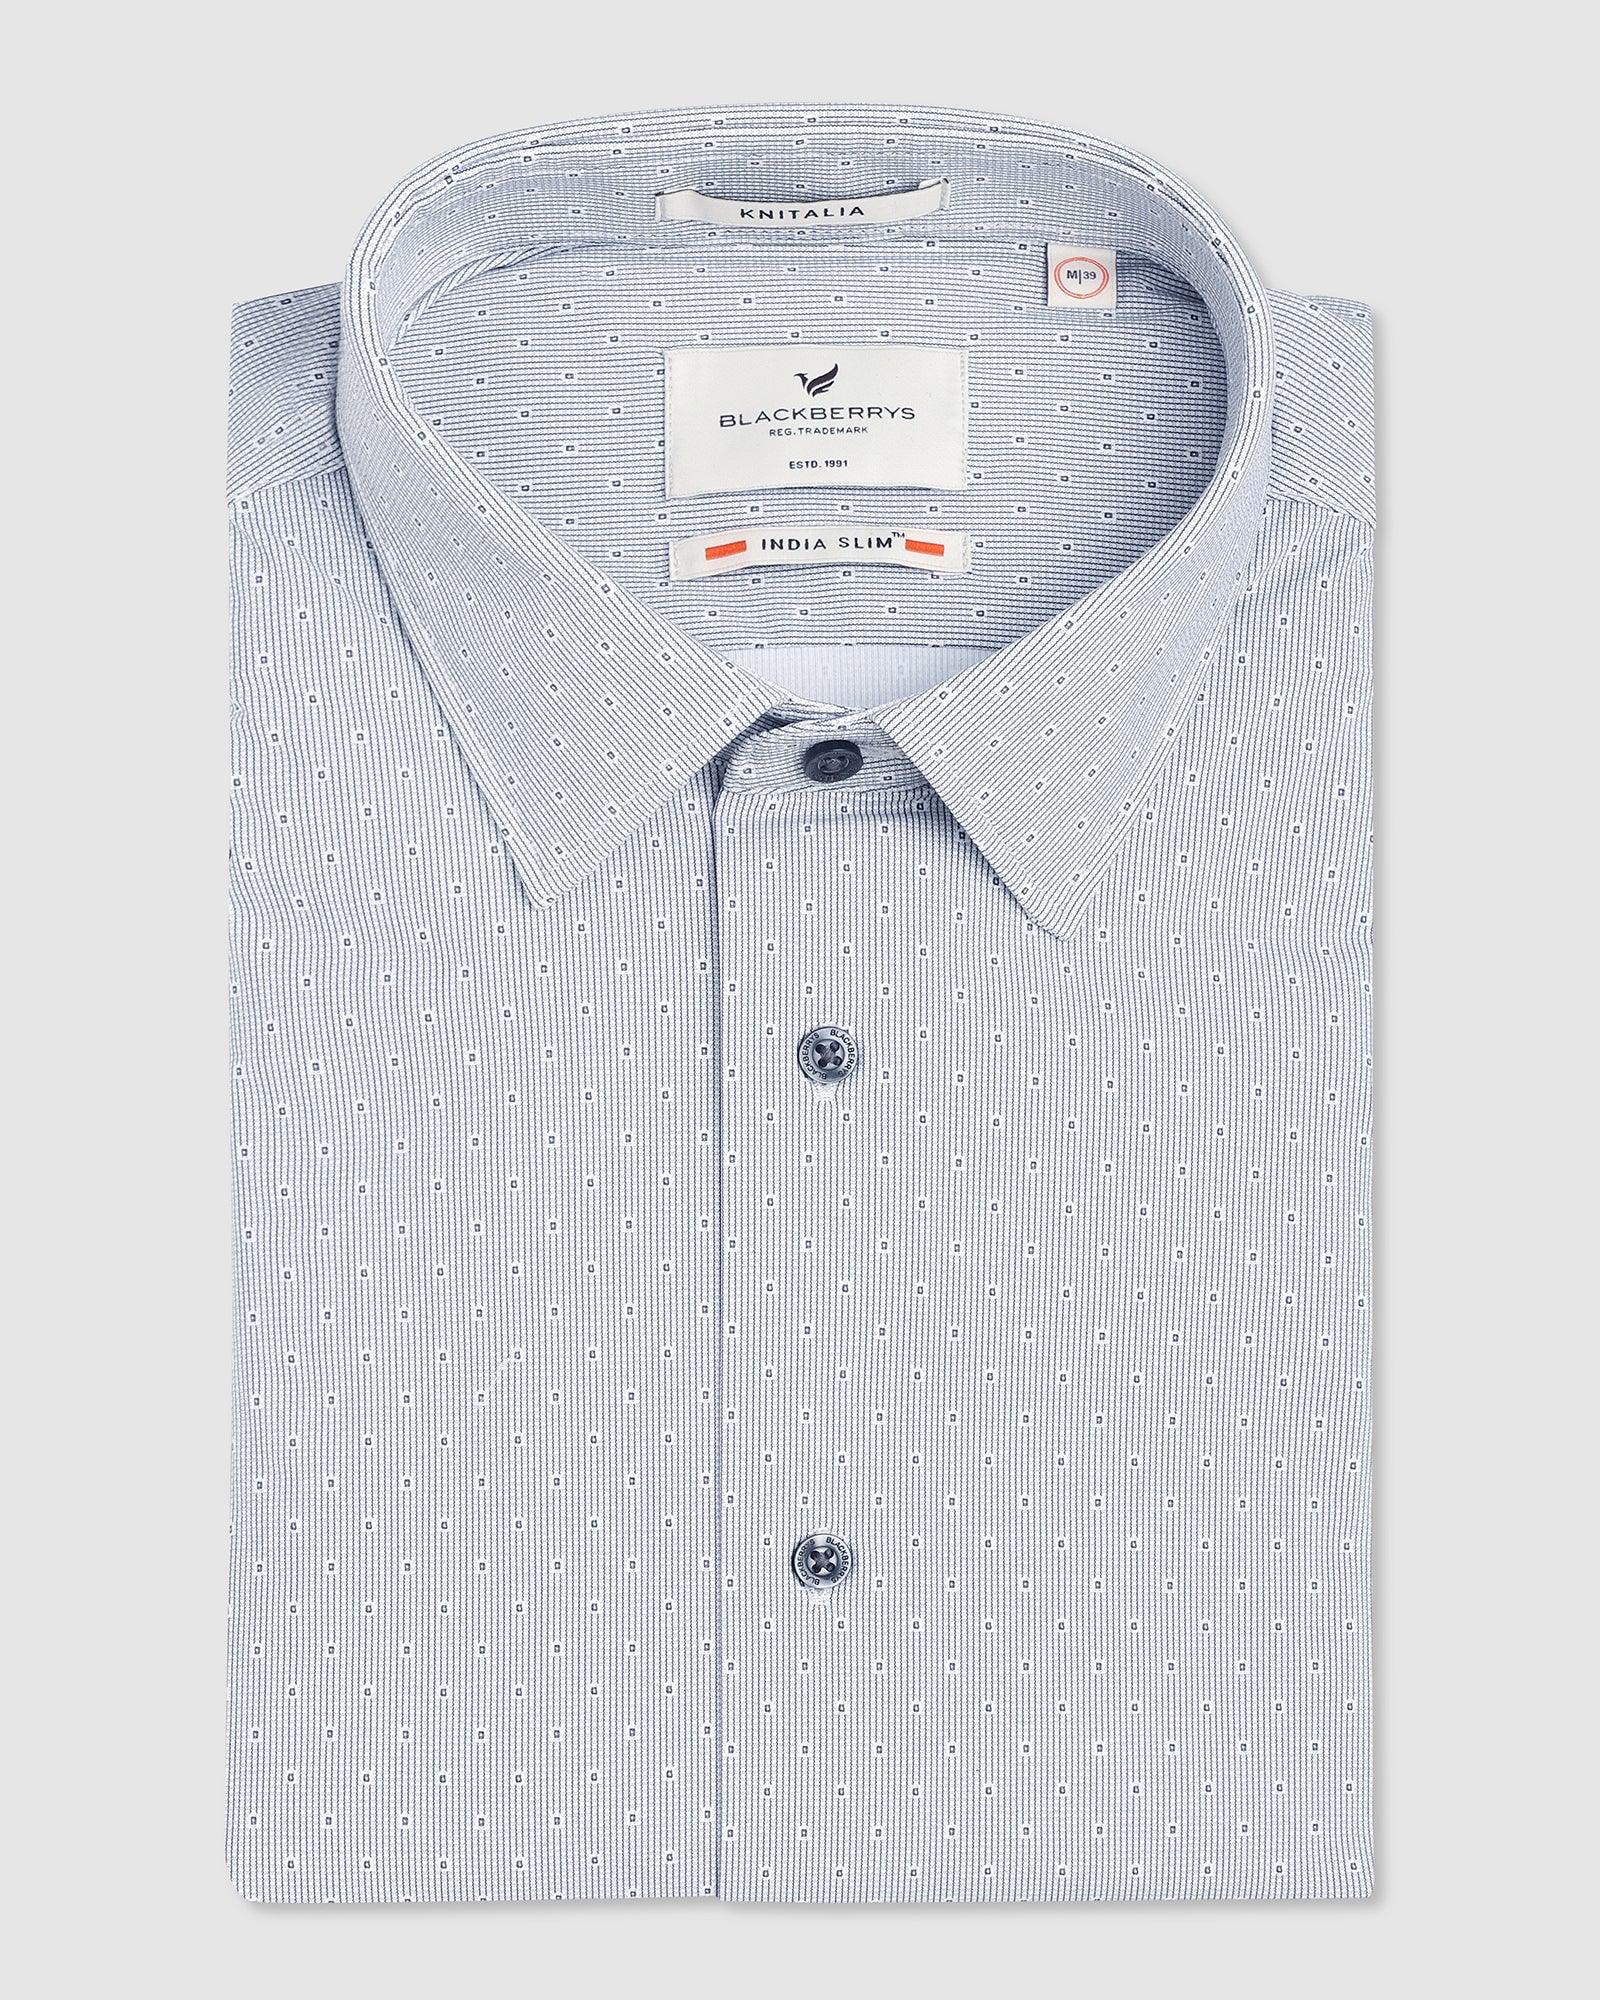 TechPro Formal Grey Textured Shirt - Raider